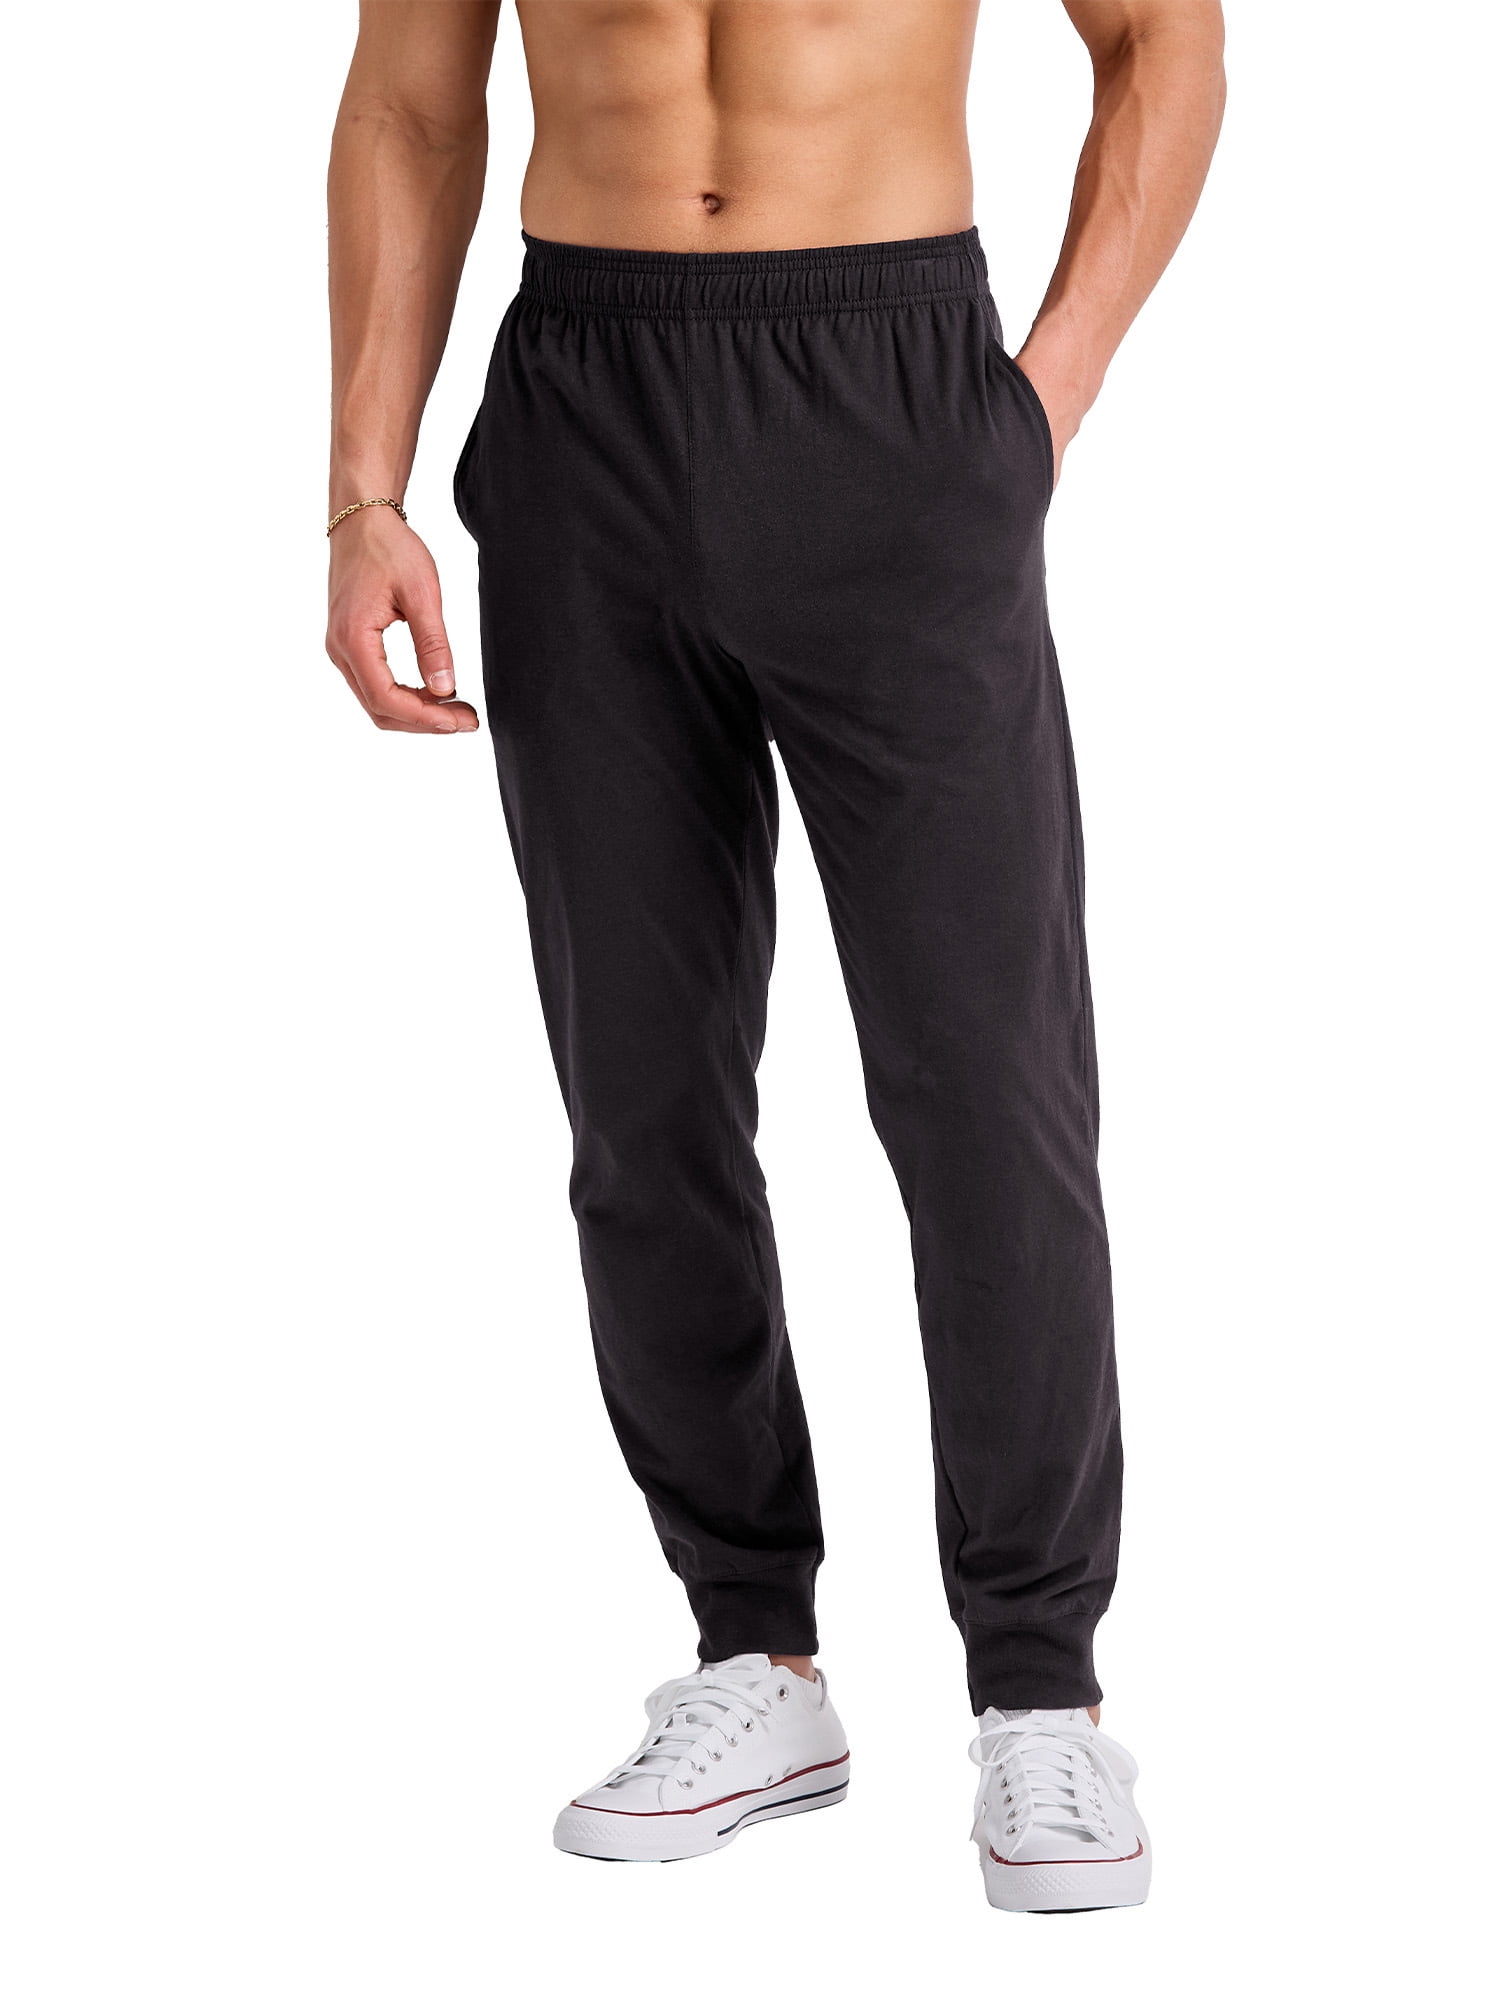 Hanes Originals Men's Cotton Joggers with Pockets, 30.5 Black 2XL